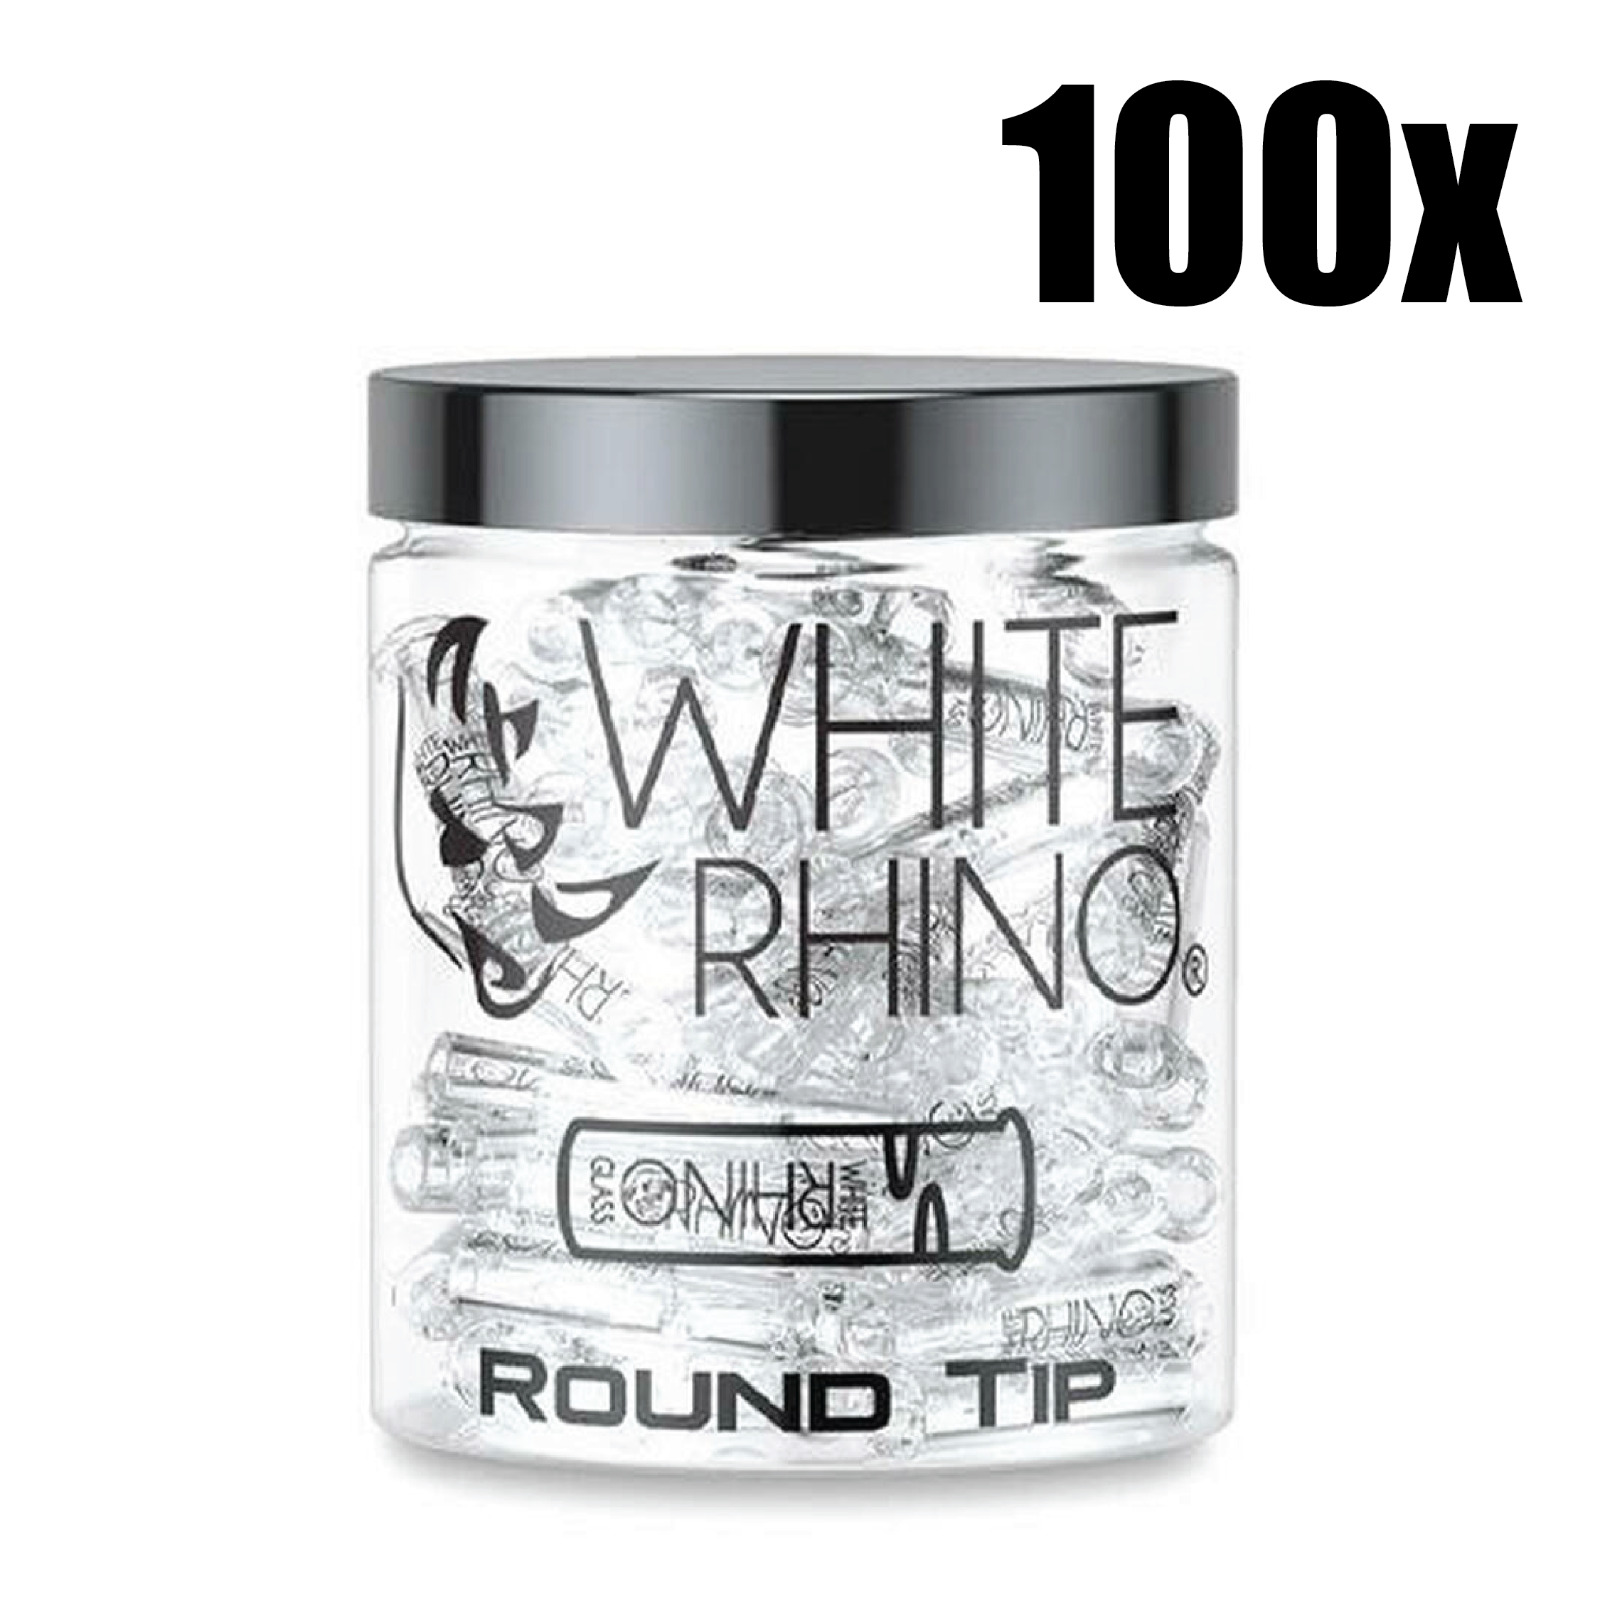 Full Jar 100x Tips White Rhino Smoking Round Glass Rolling Tips Regular Size 9MM